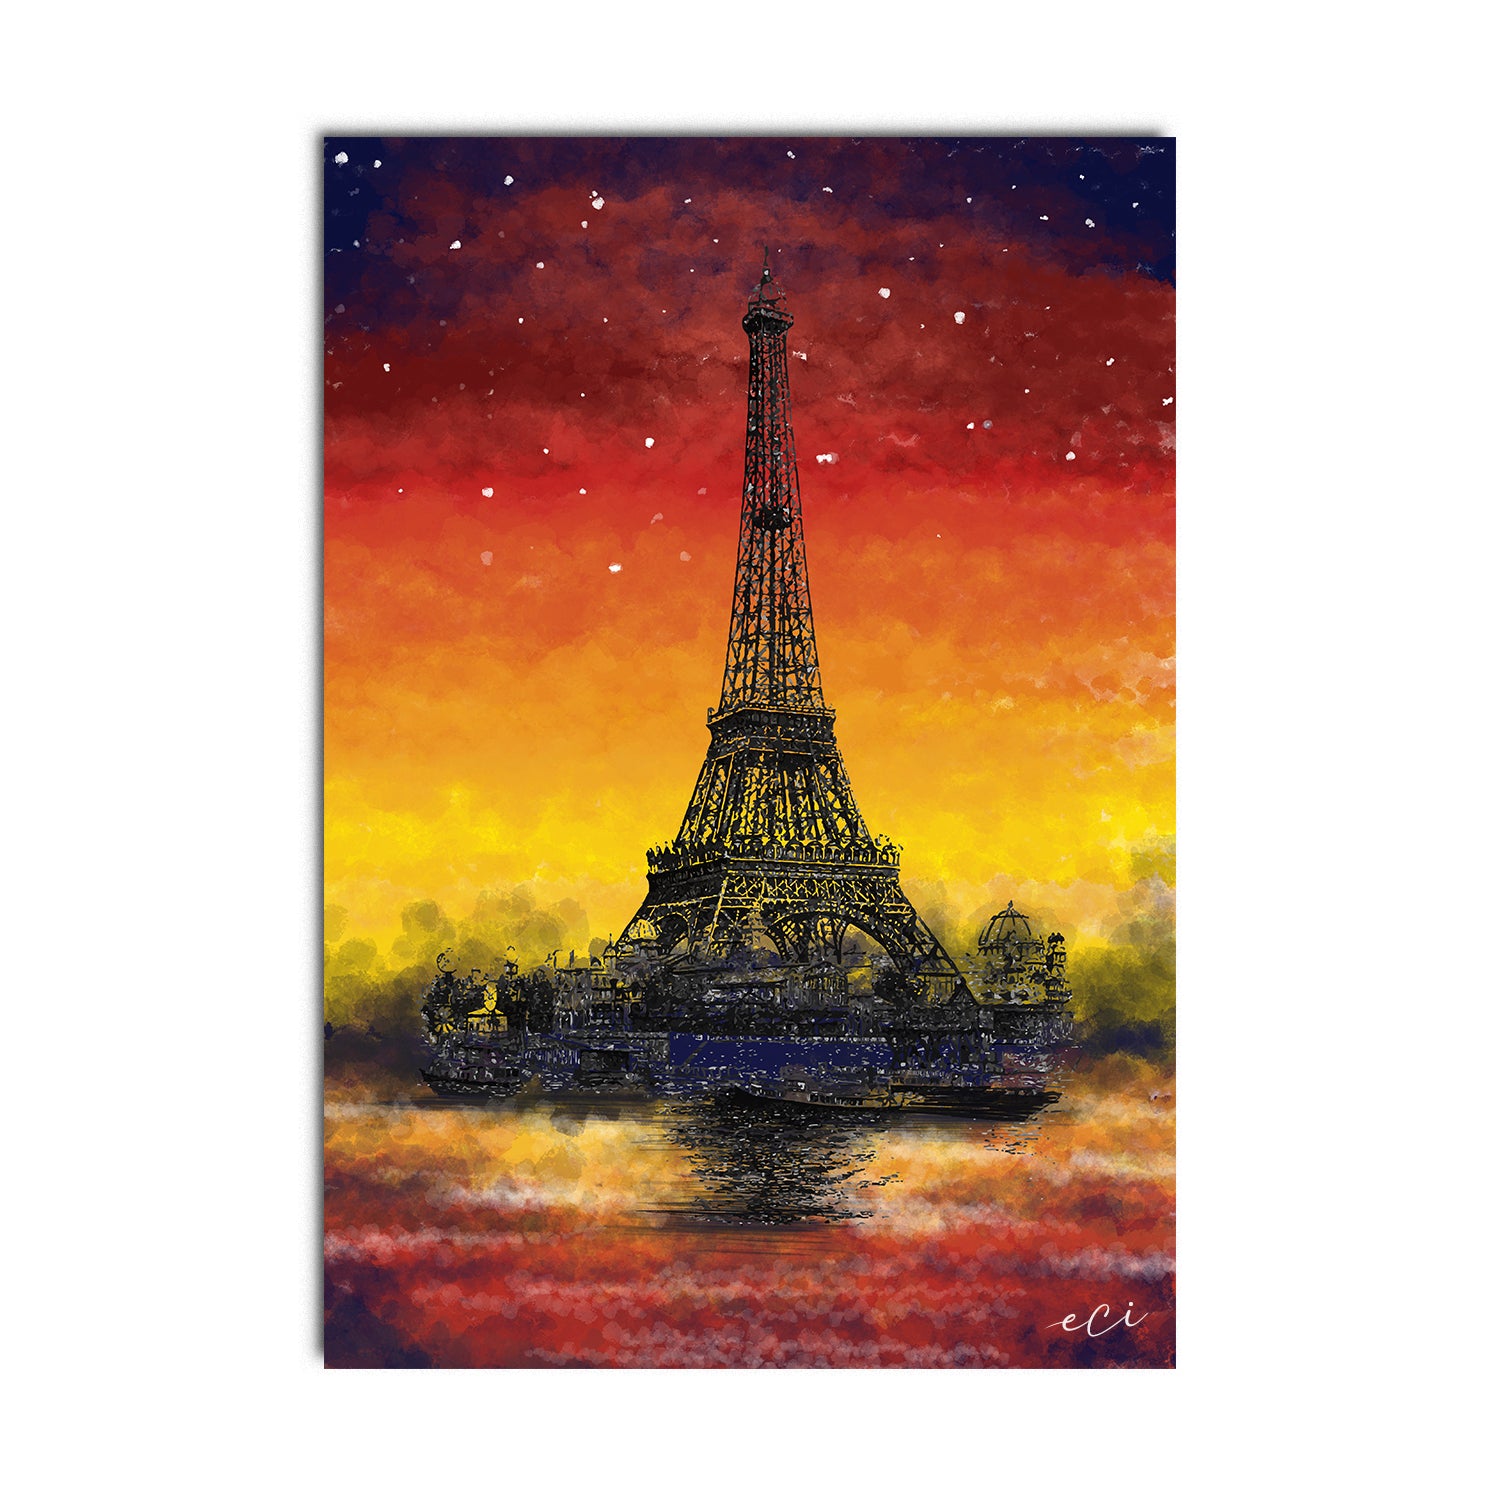 Paris Eiffel Tower Canvas Painting Digital Printed Religious Wall Art 2